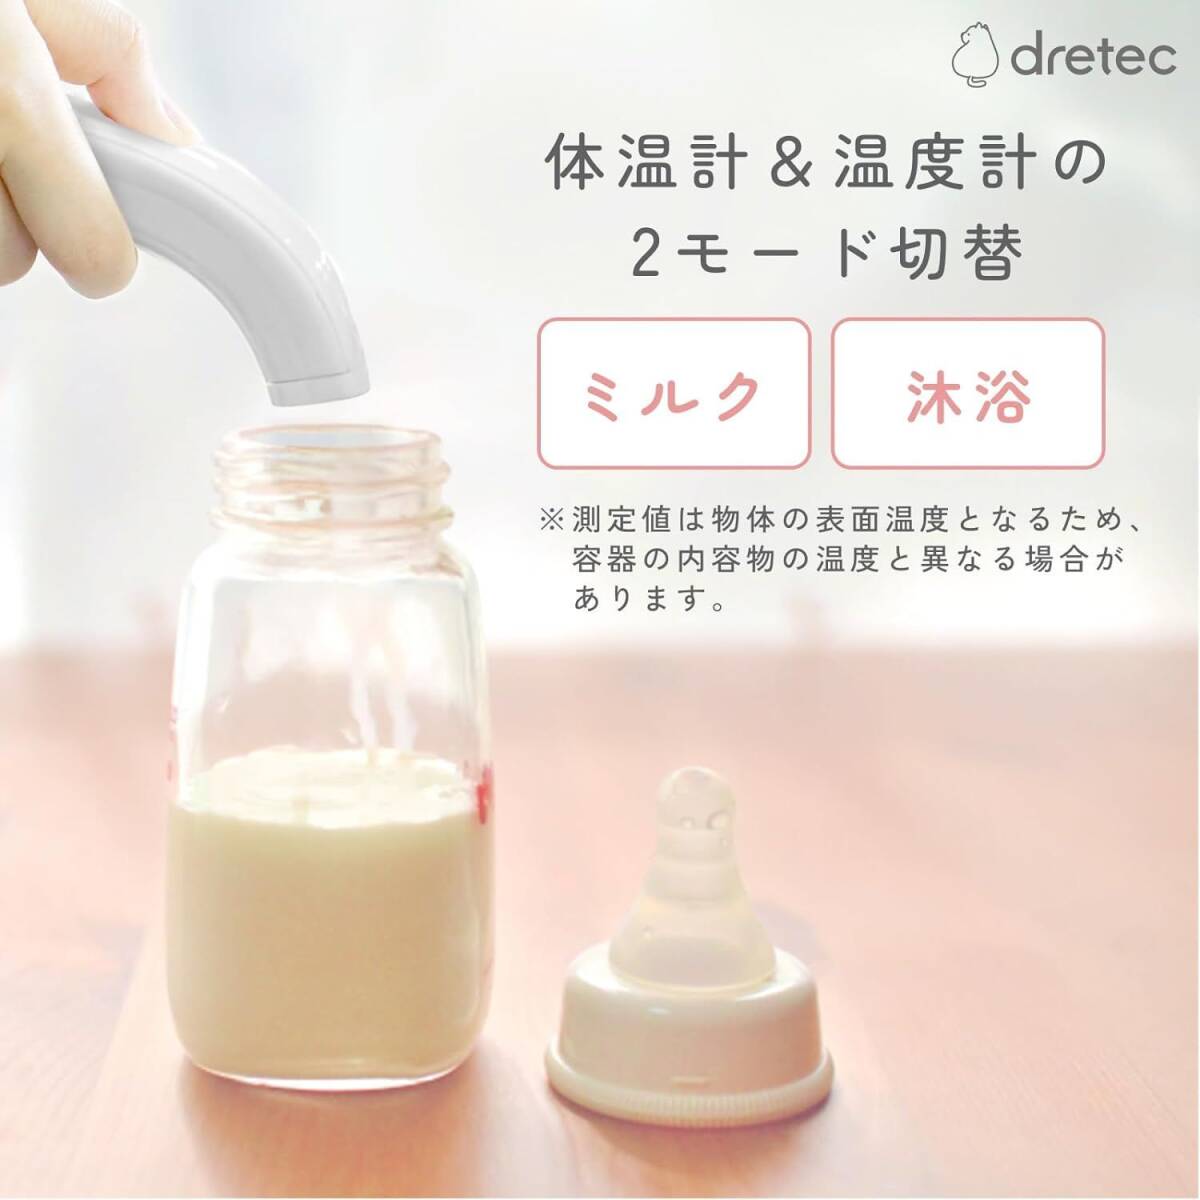 dretec(ドリテック) 非接触体温計 医療機器認証取得 日本メーカー 体温計 赤ちゃん 非接触 1秒測定・ 使用環境温度10〜40℃ TO-401_画像7